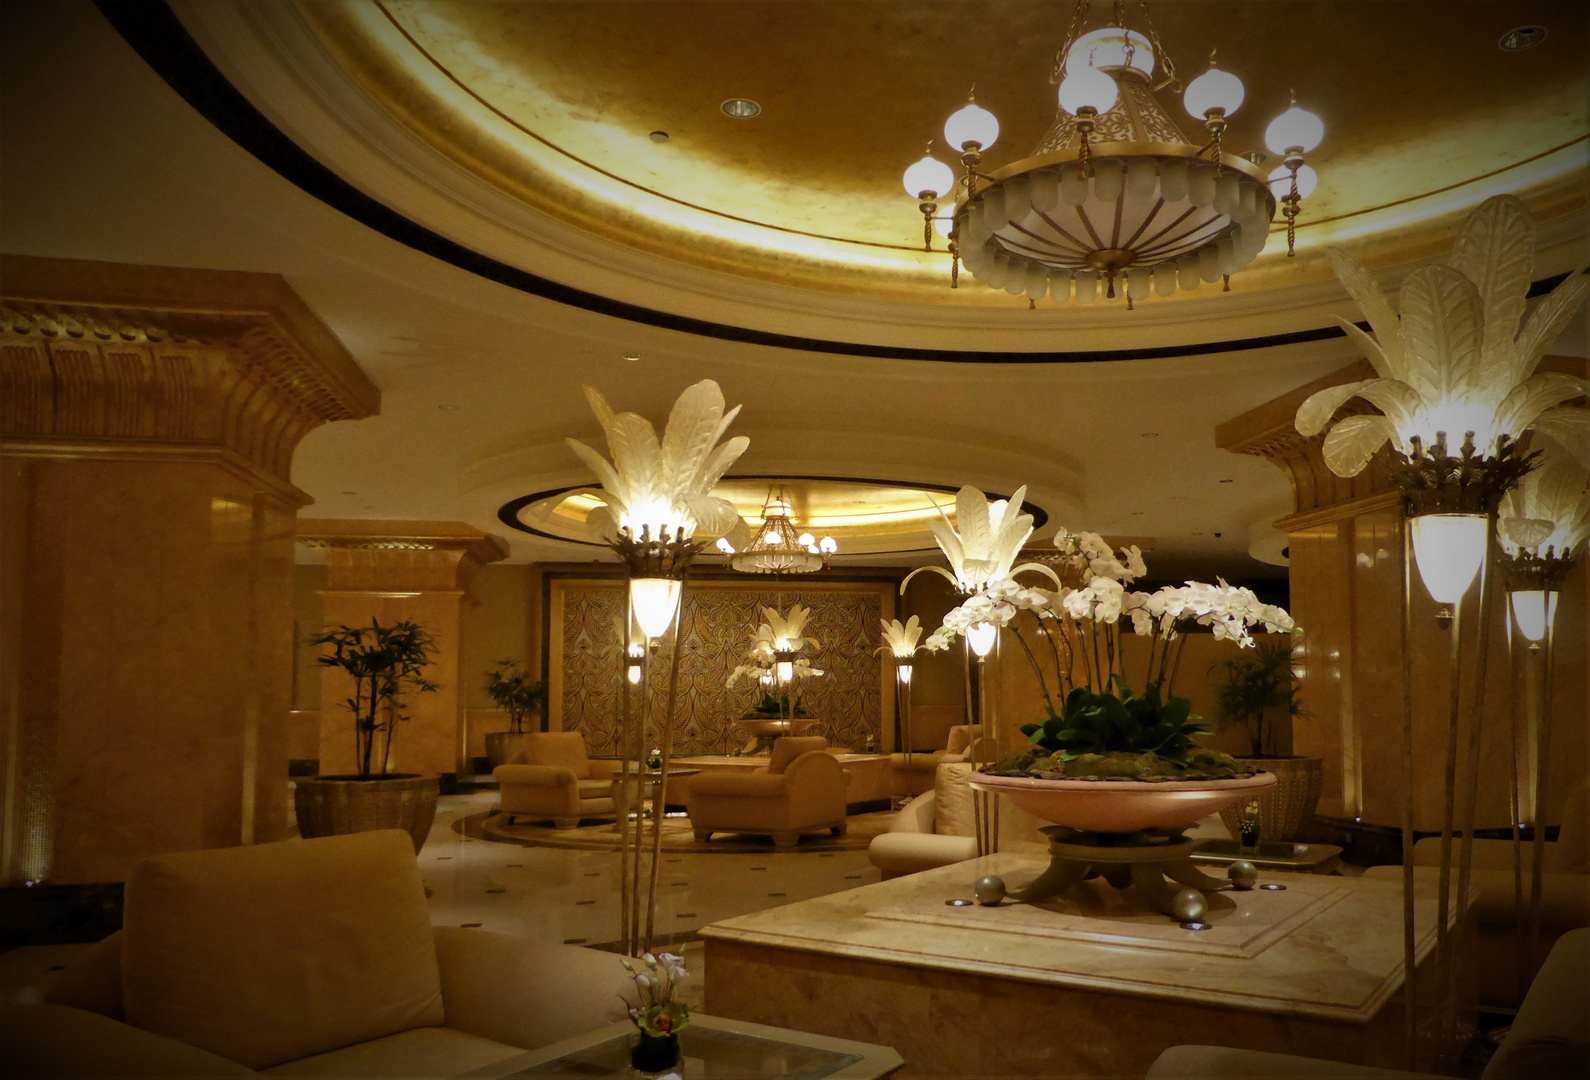 Emirate Palace Hotel